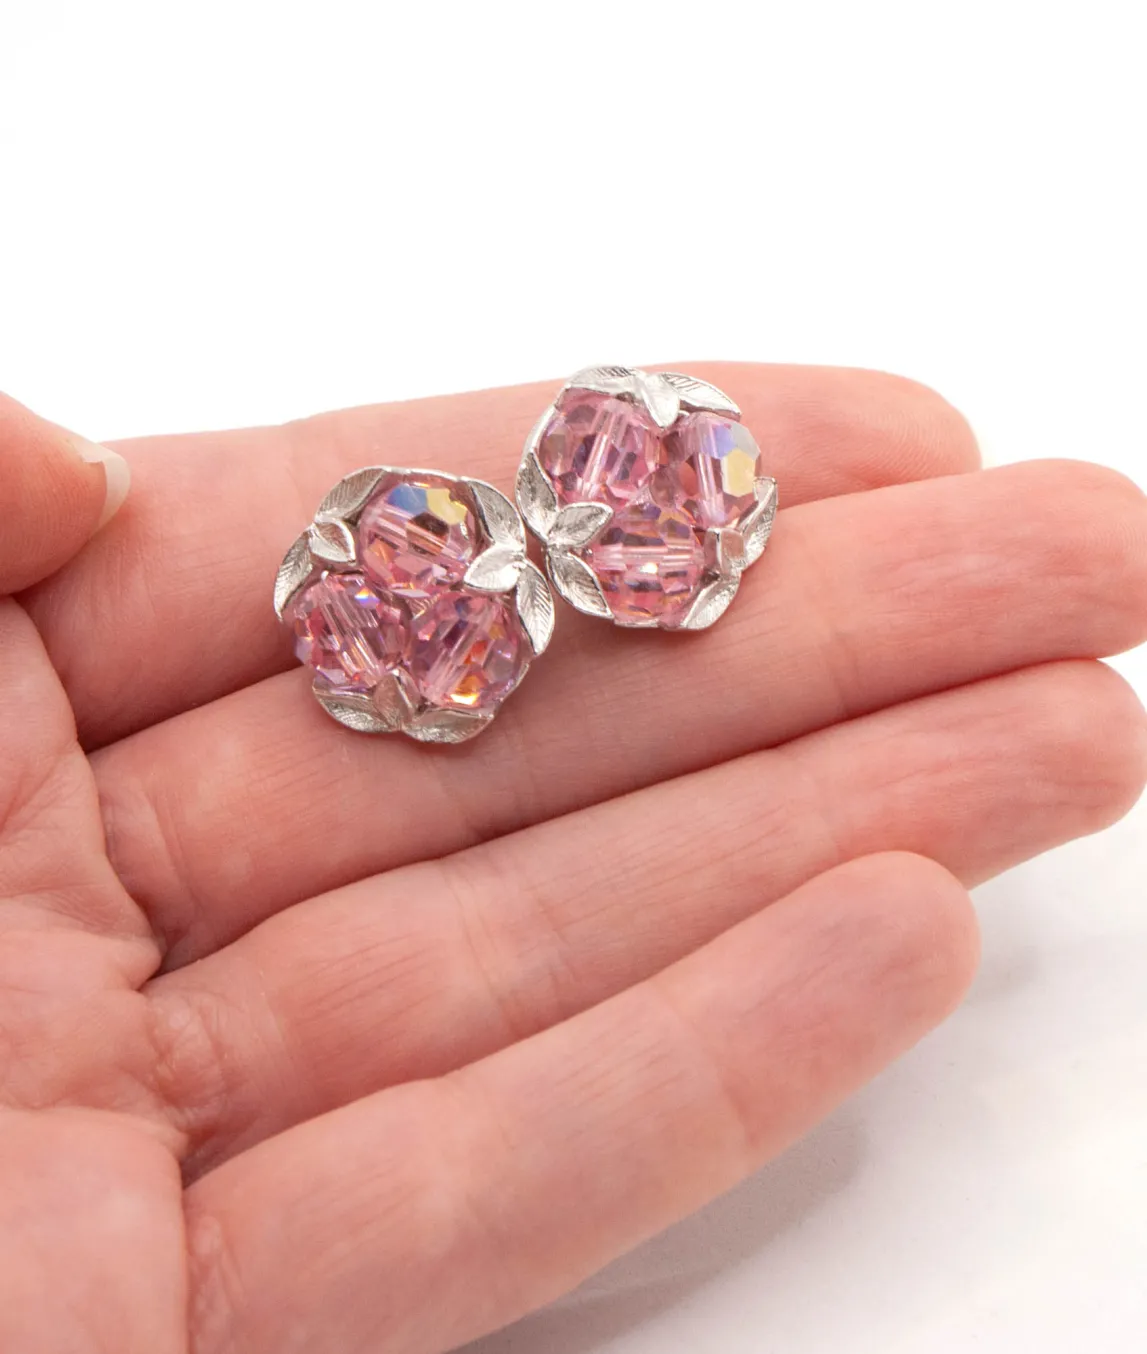 Small pink vintage earrings in silver metal held in a hand